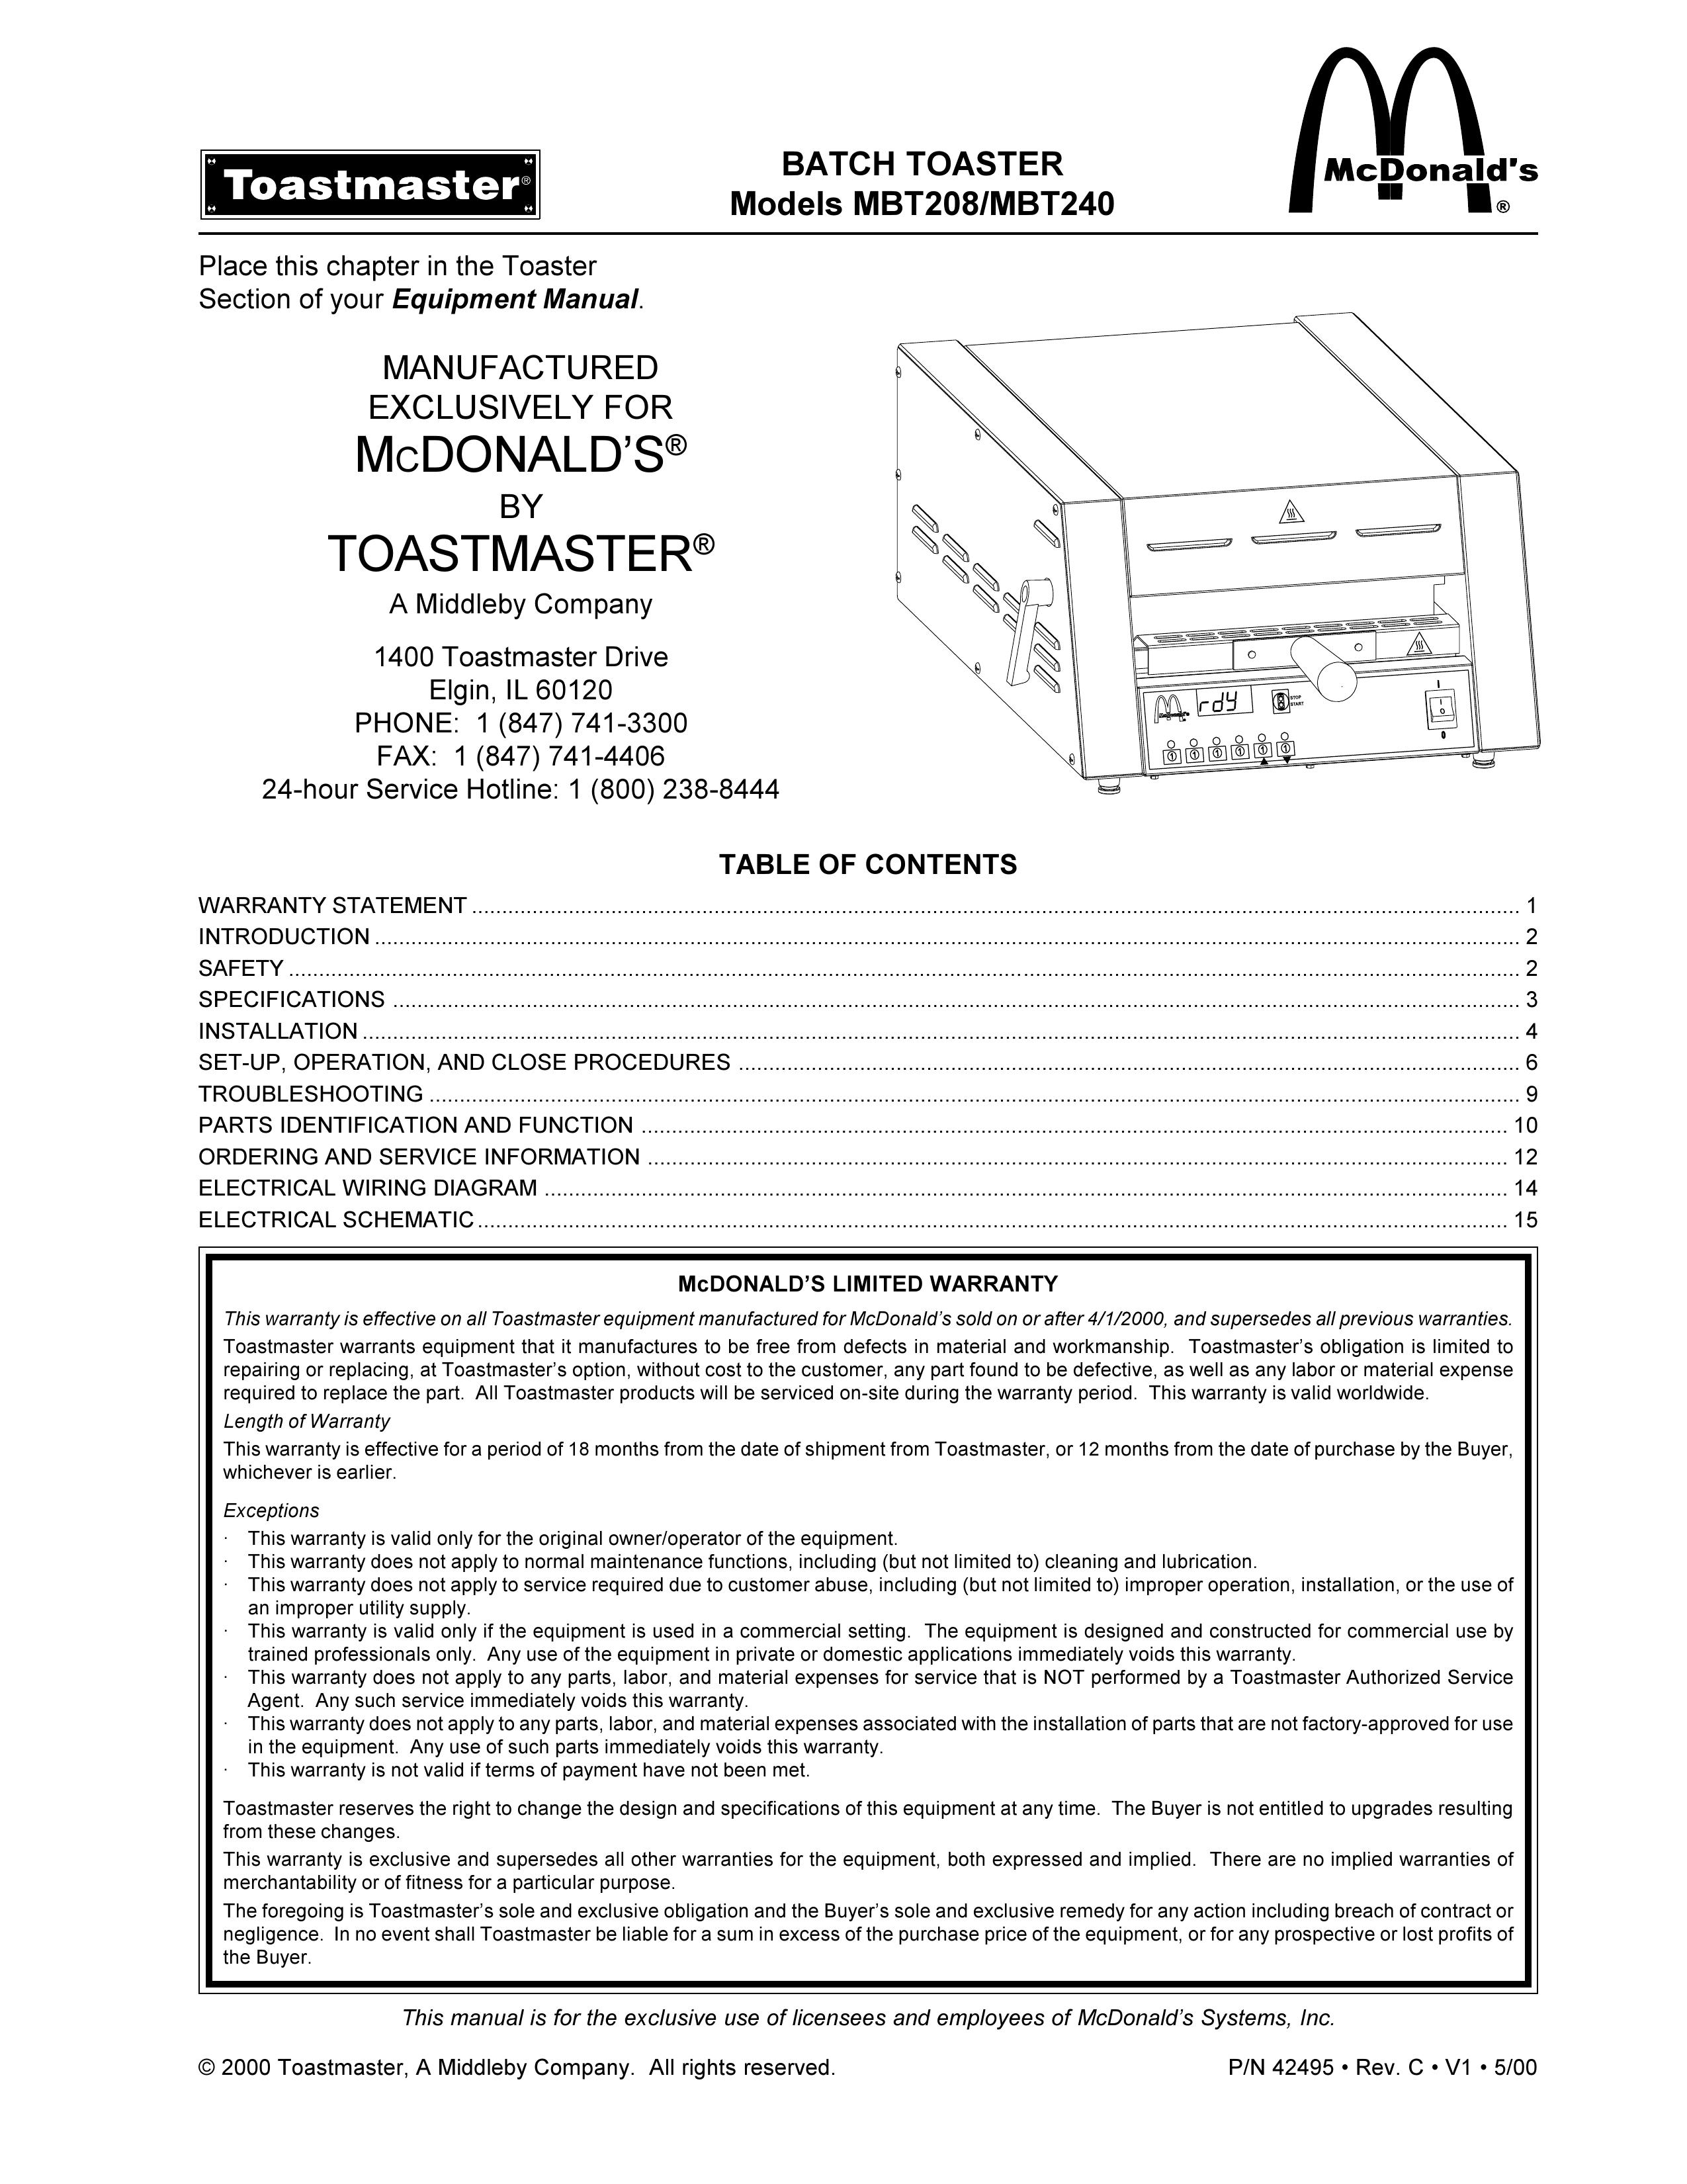 Toastmaster MBT240 Toaster User Manual